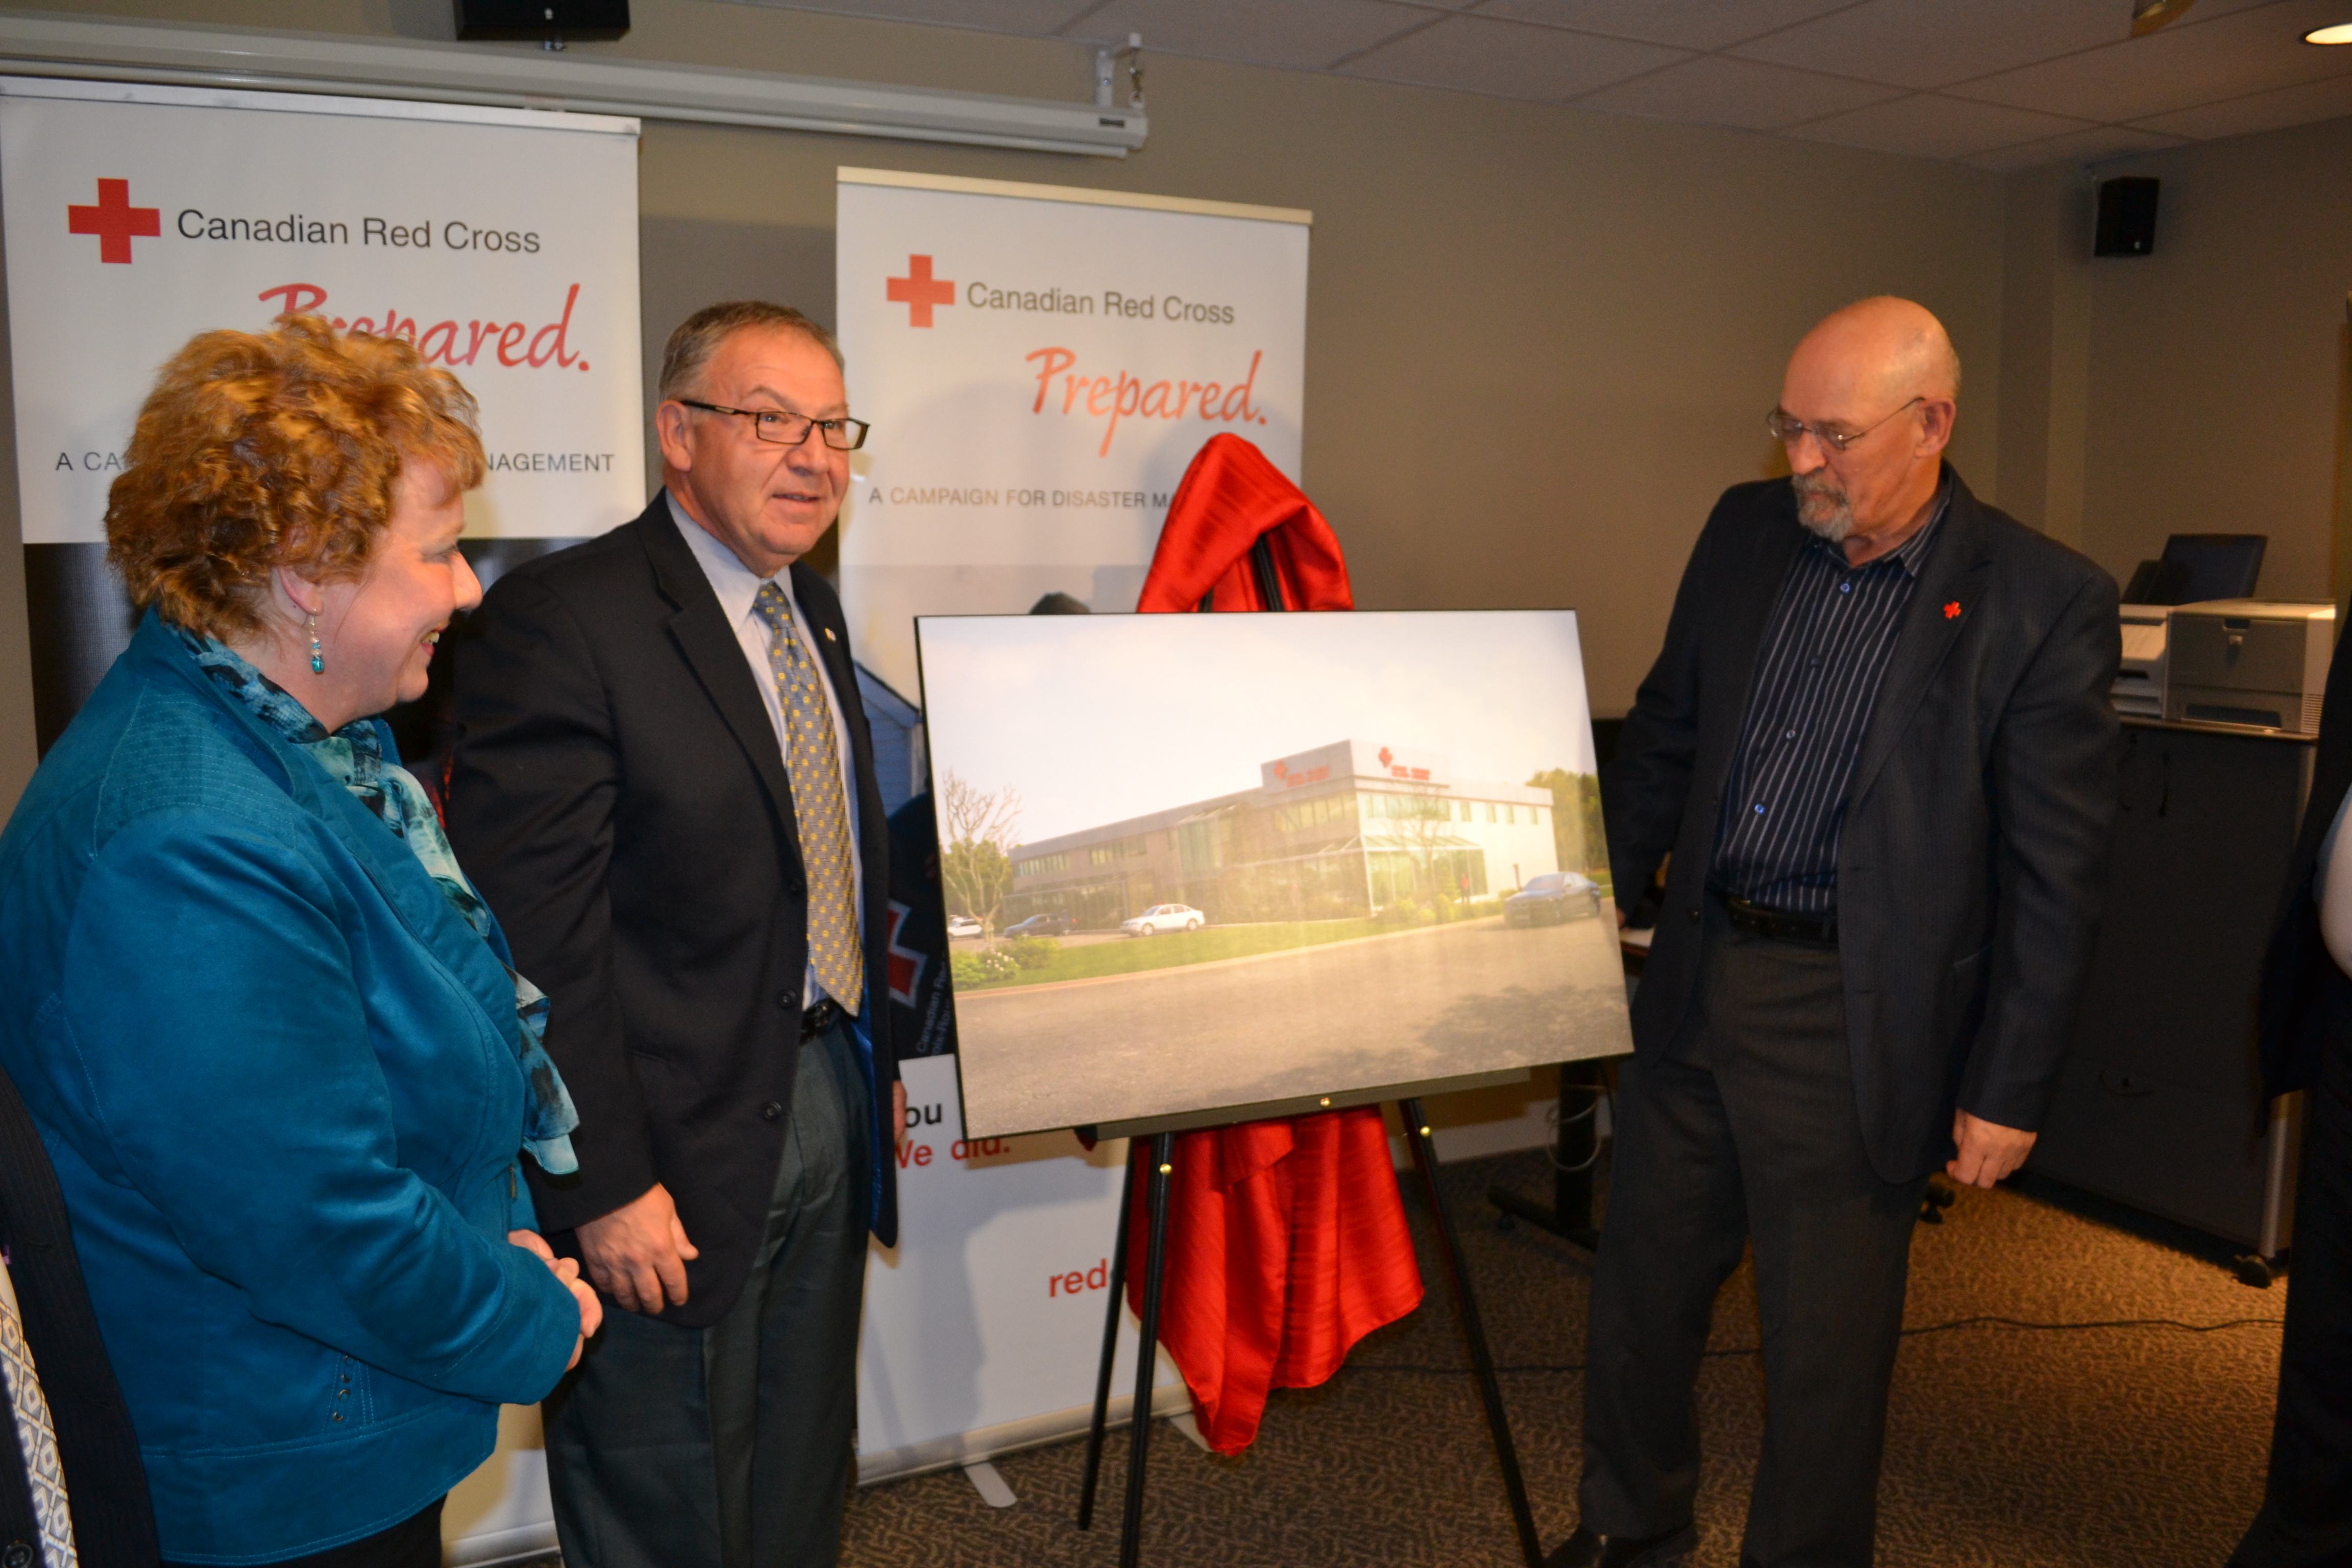 Nova Scotia Premier Dexter announces funding for Canadian Red Cross